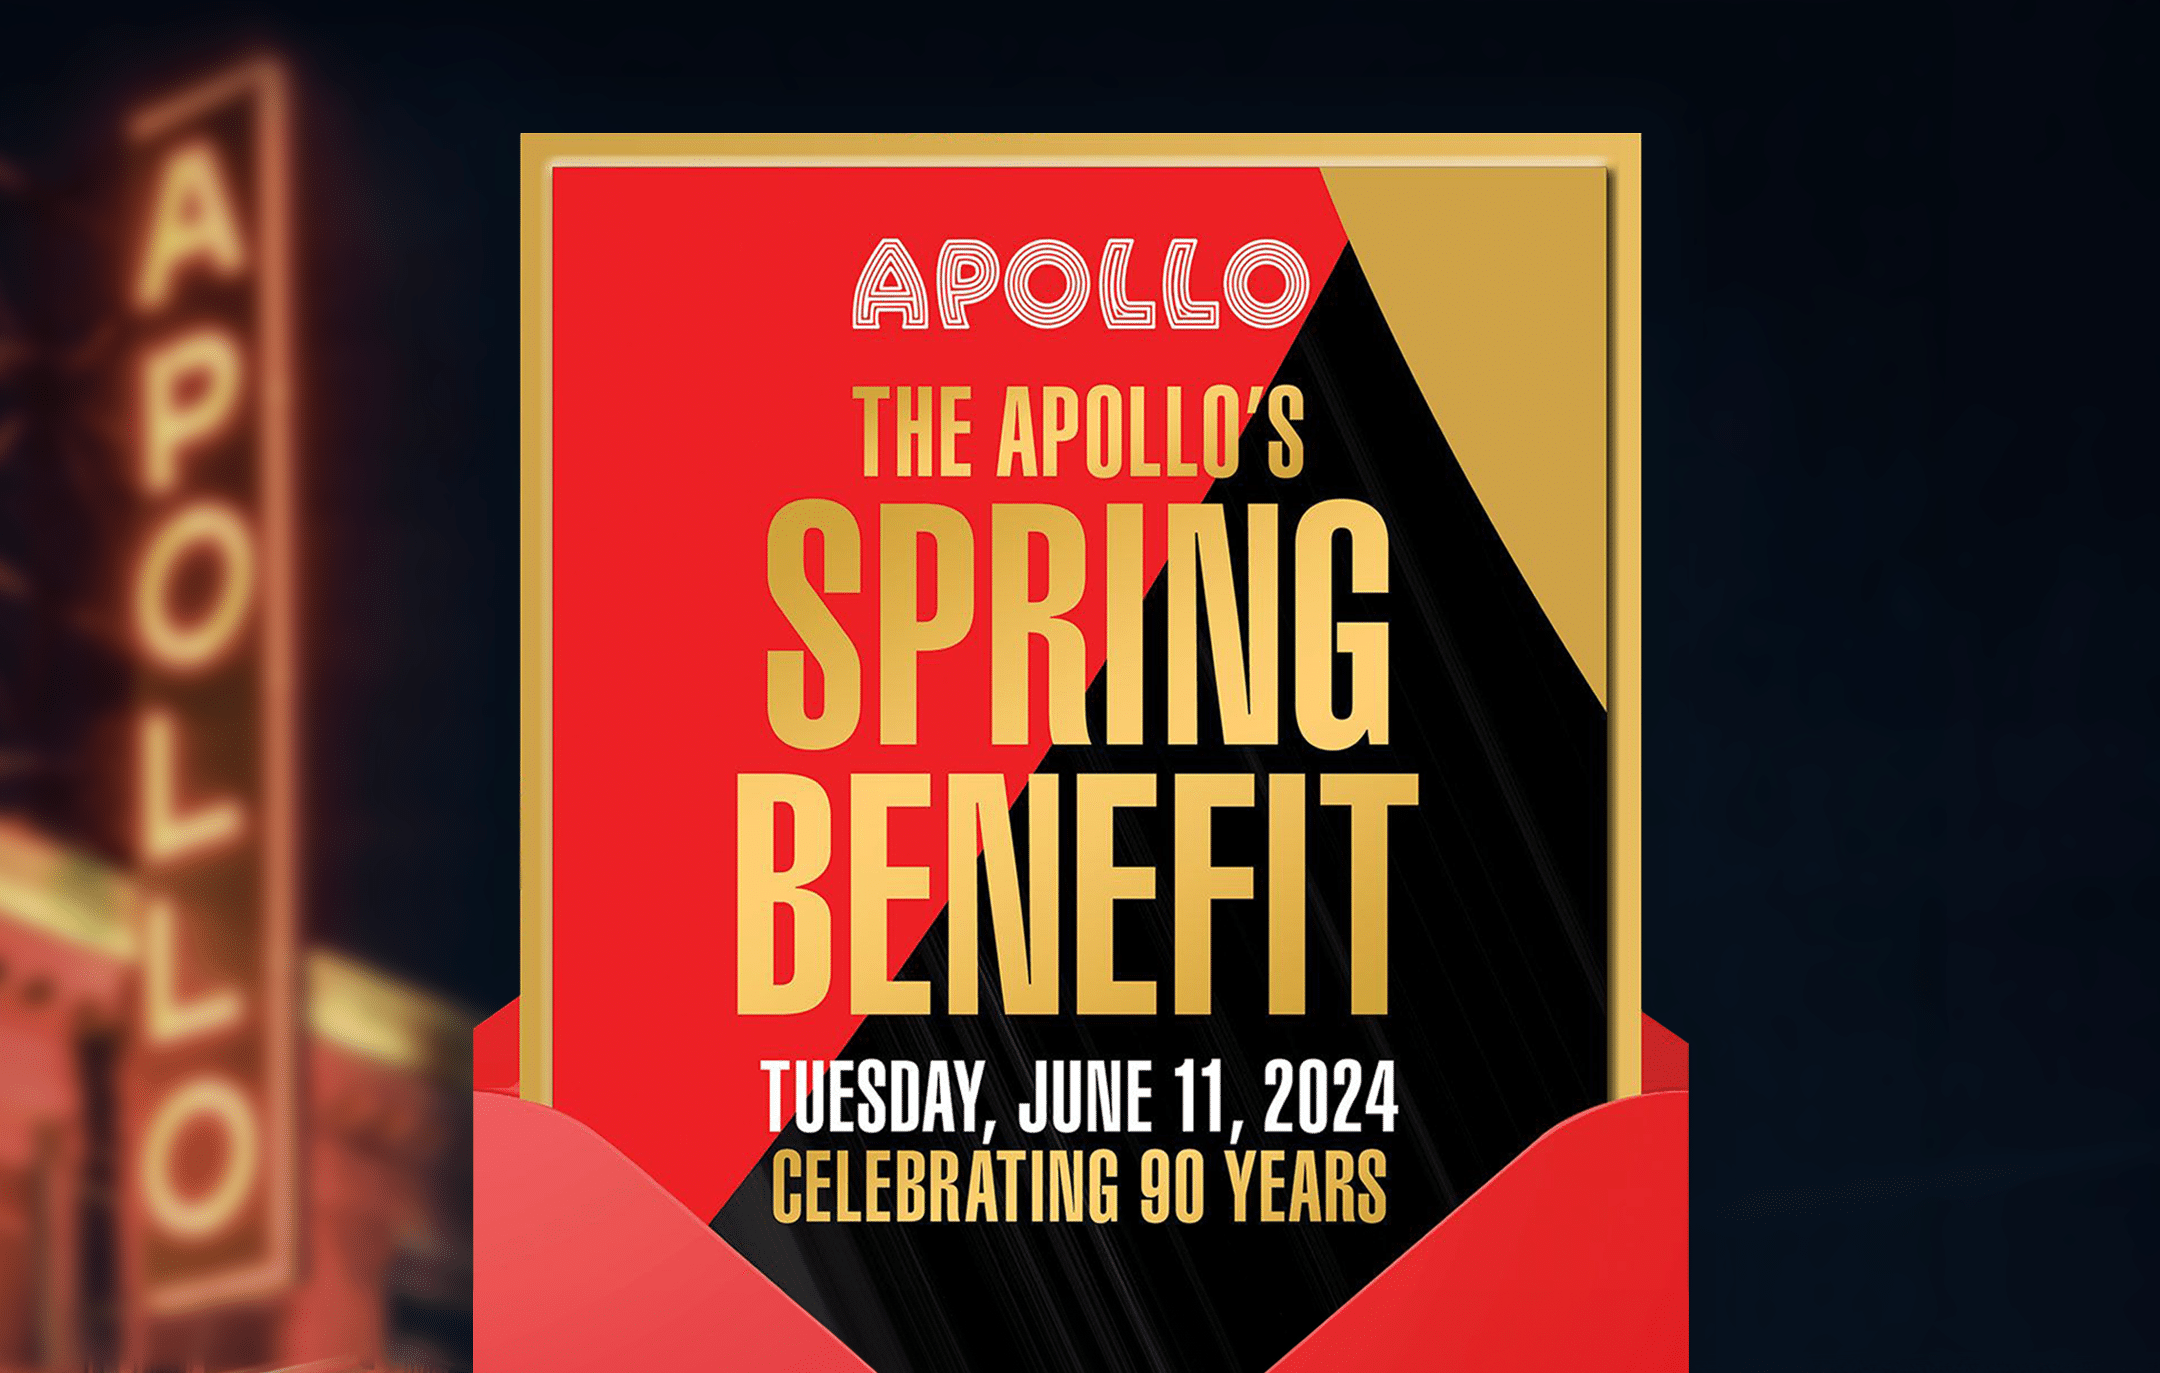 Apollo Spring Benefit 2024